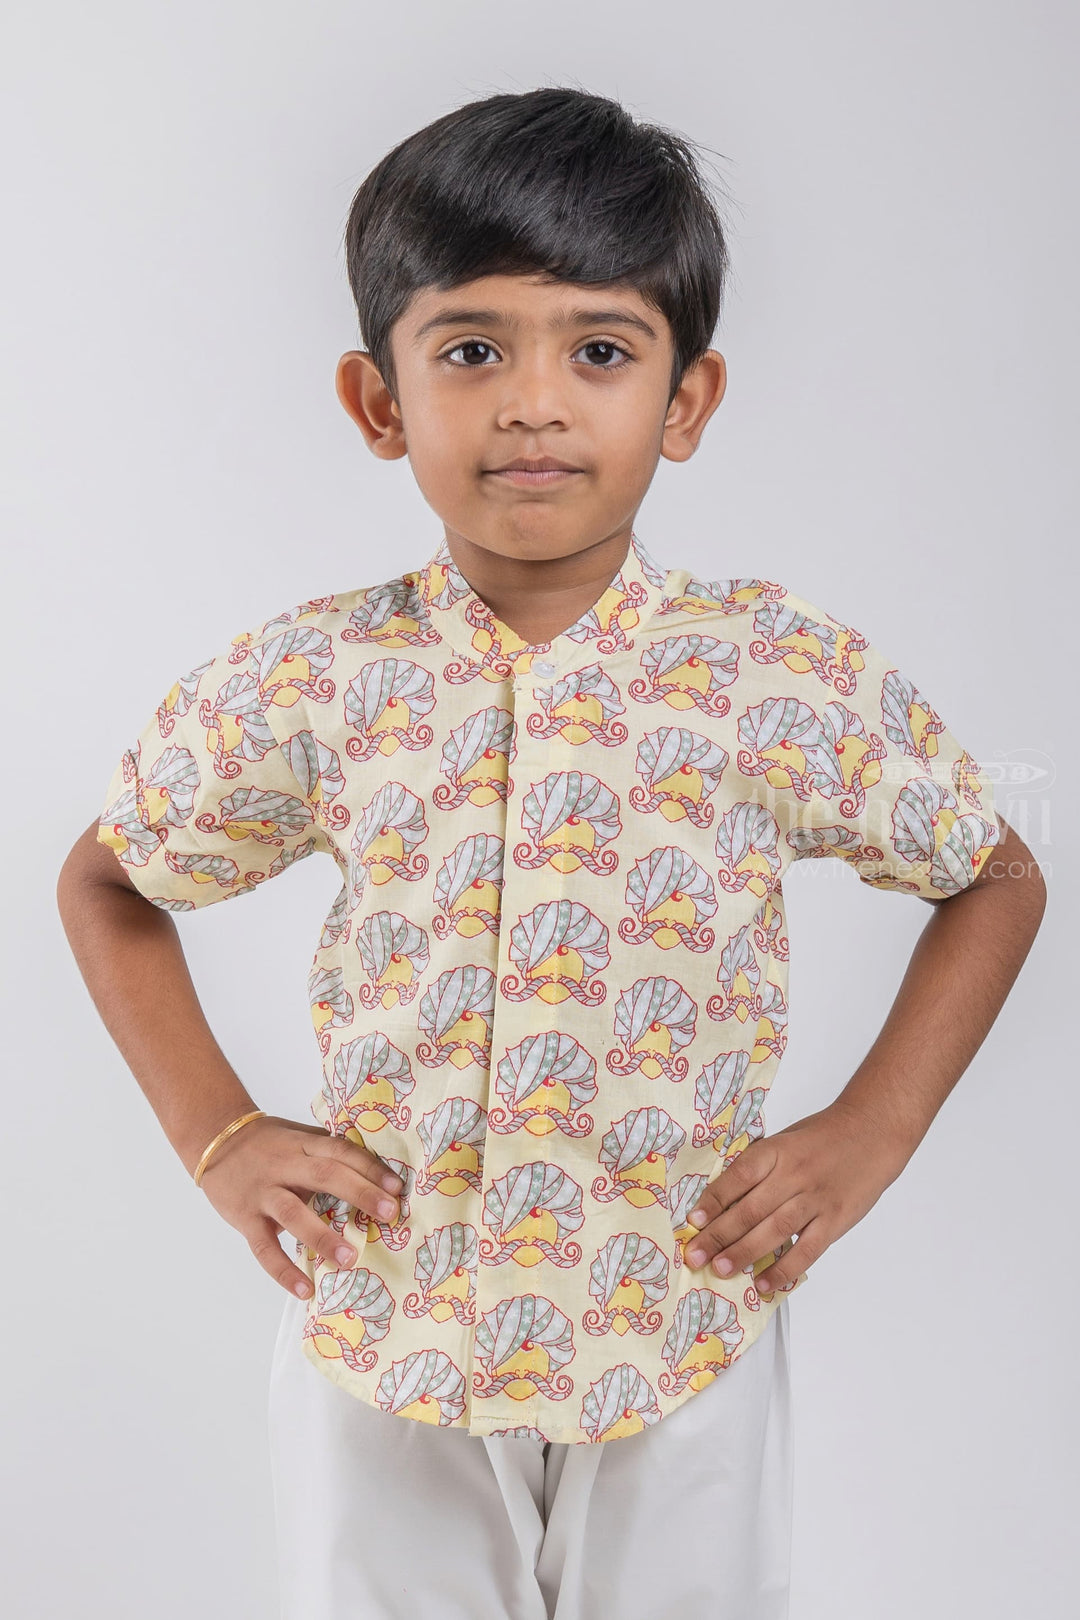 The Nesavu Boys Cotton Shirt Boys Rajasthani Printed Yellow Cotton Shirt By The Nesavu psr silks Nesavu 14 (6M) / Yellow / Cotton BS045C